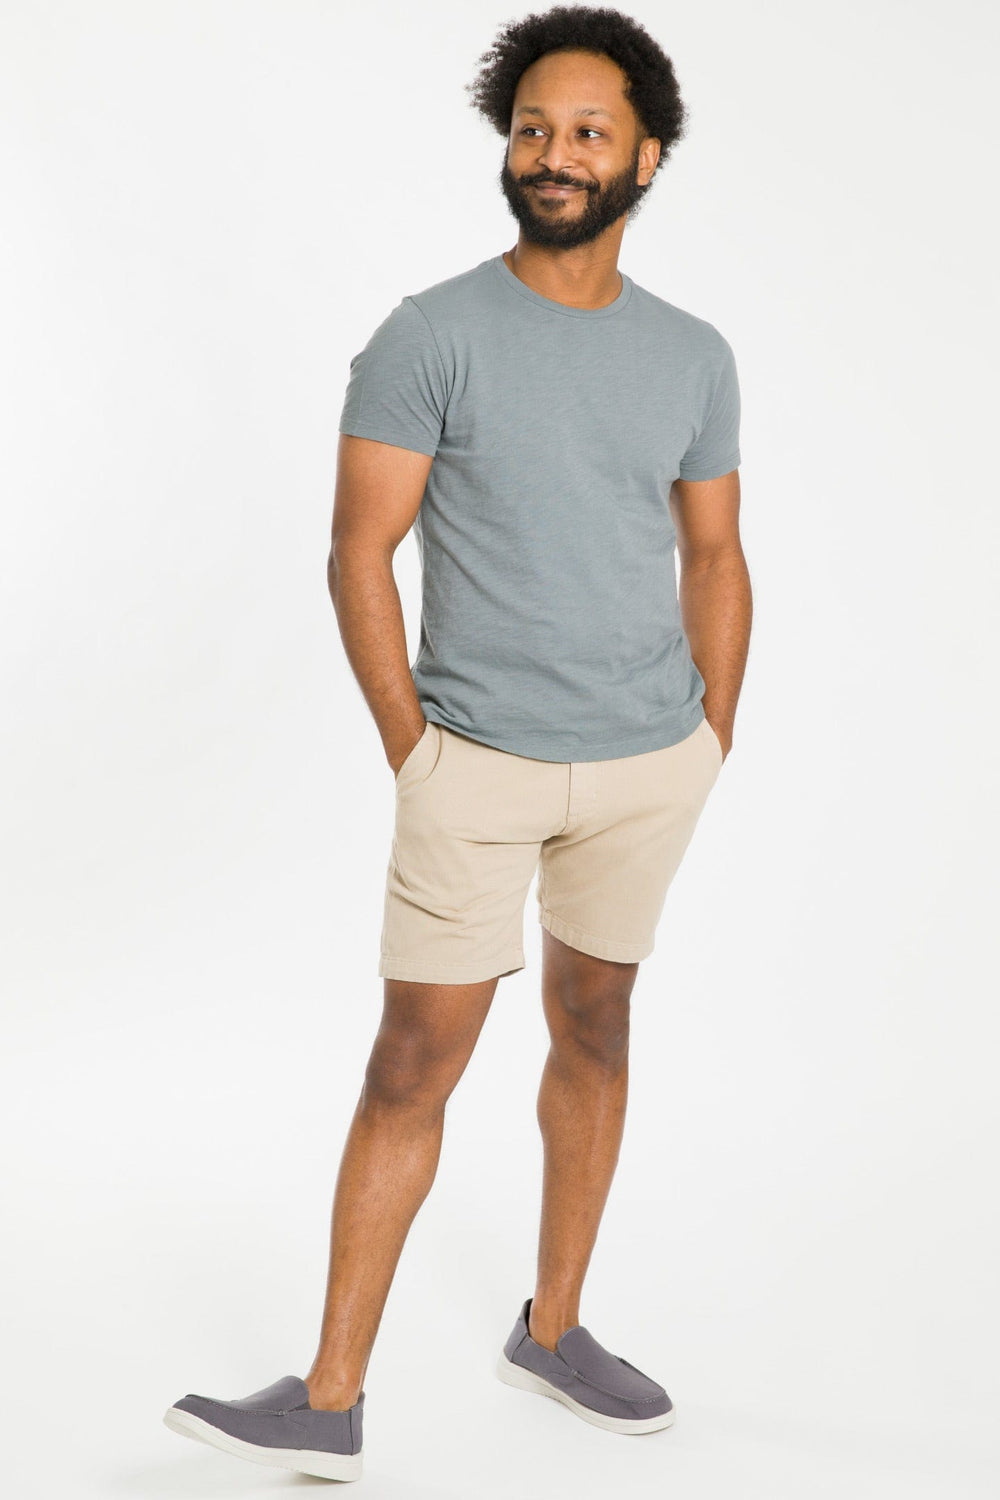 Buy Lightweight Washed Steel Pima Cotton Crew Neck T-Shirt for Short Men | Ash & Erie   Short Sleeve Premium Tee